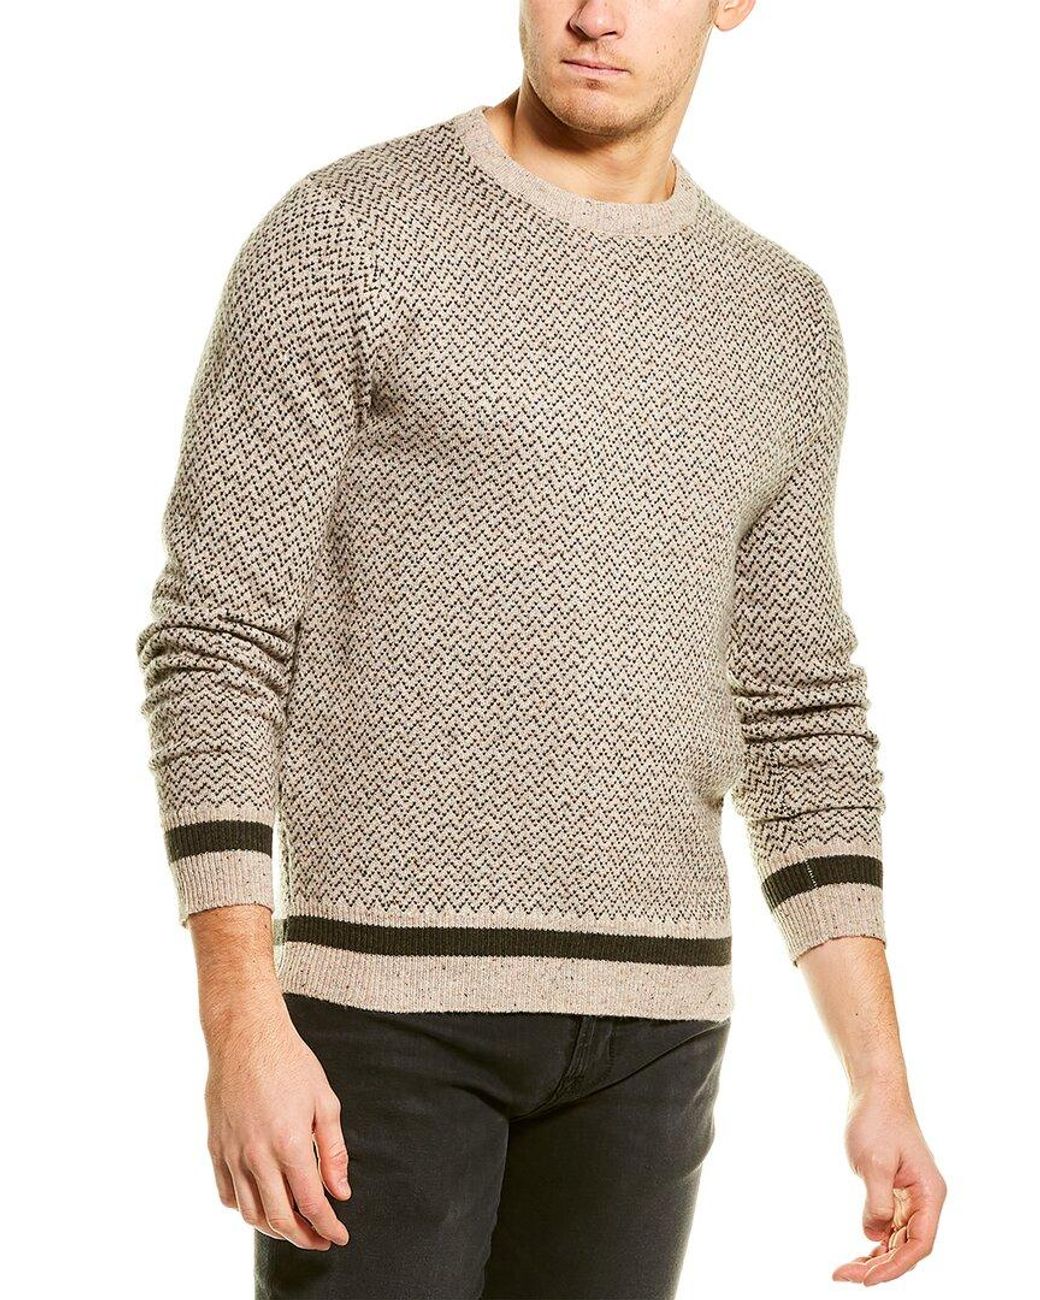 J.Crew Wool-blend Sweater in Gray for Men - Lyst